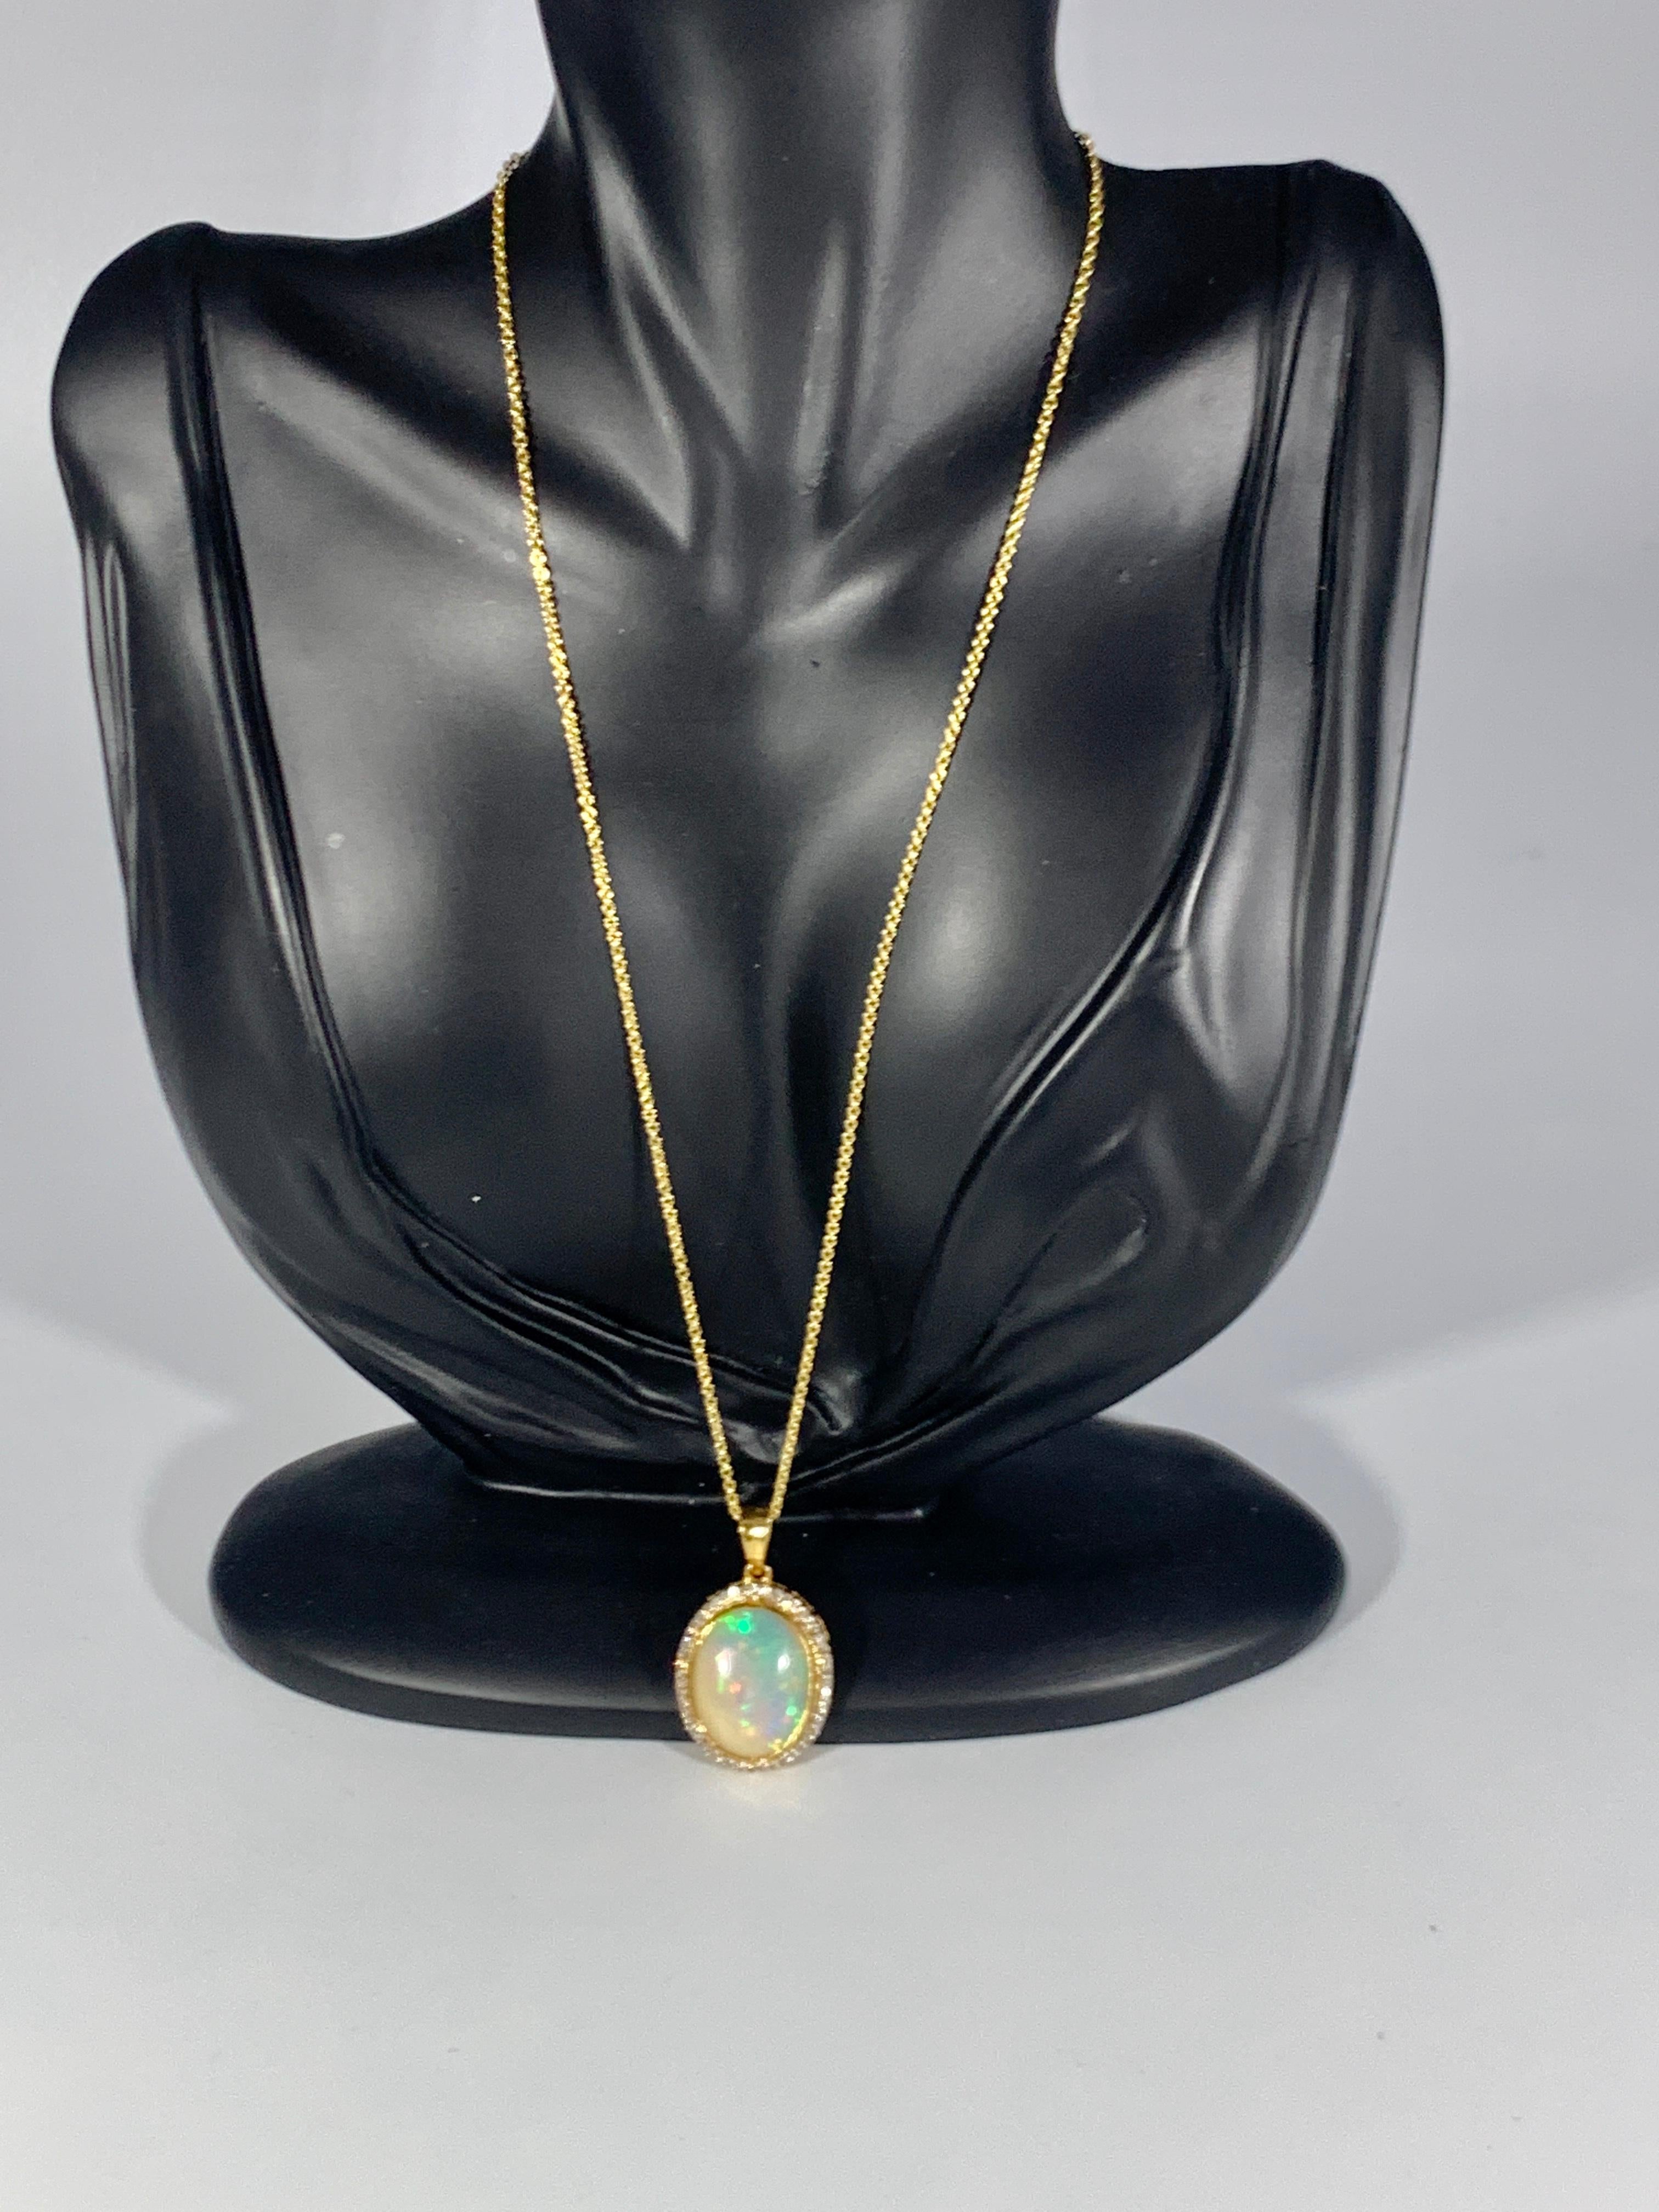 14 Carat Oval Ethiopian Opal and Diamond Pendant / Necklace 18 K Gold Necklace 2